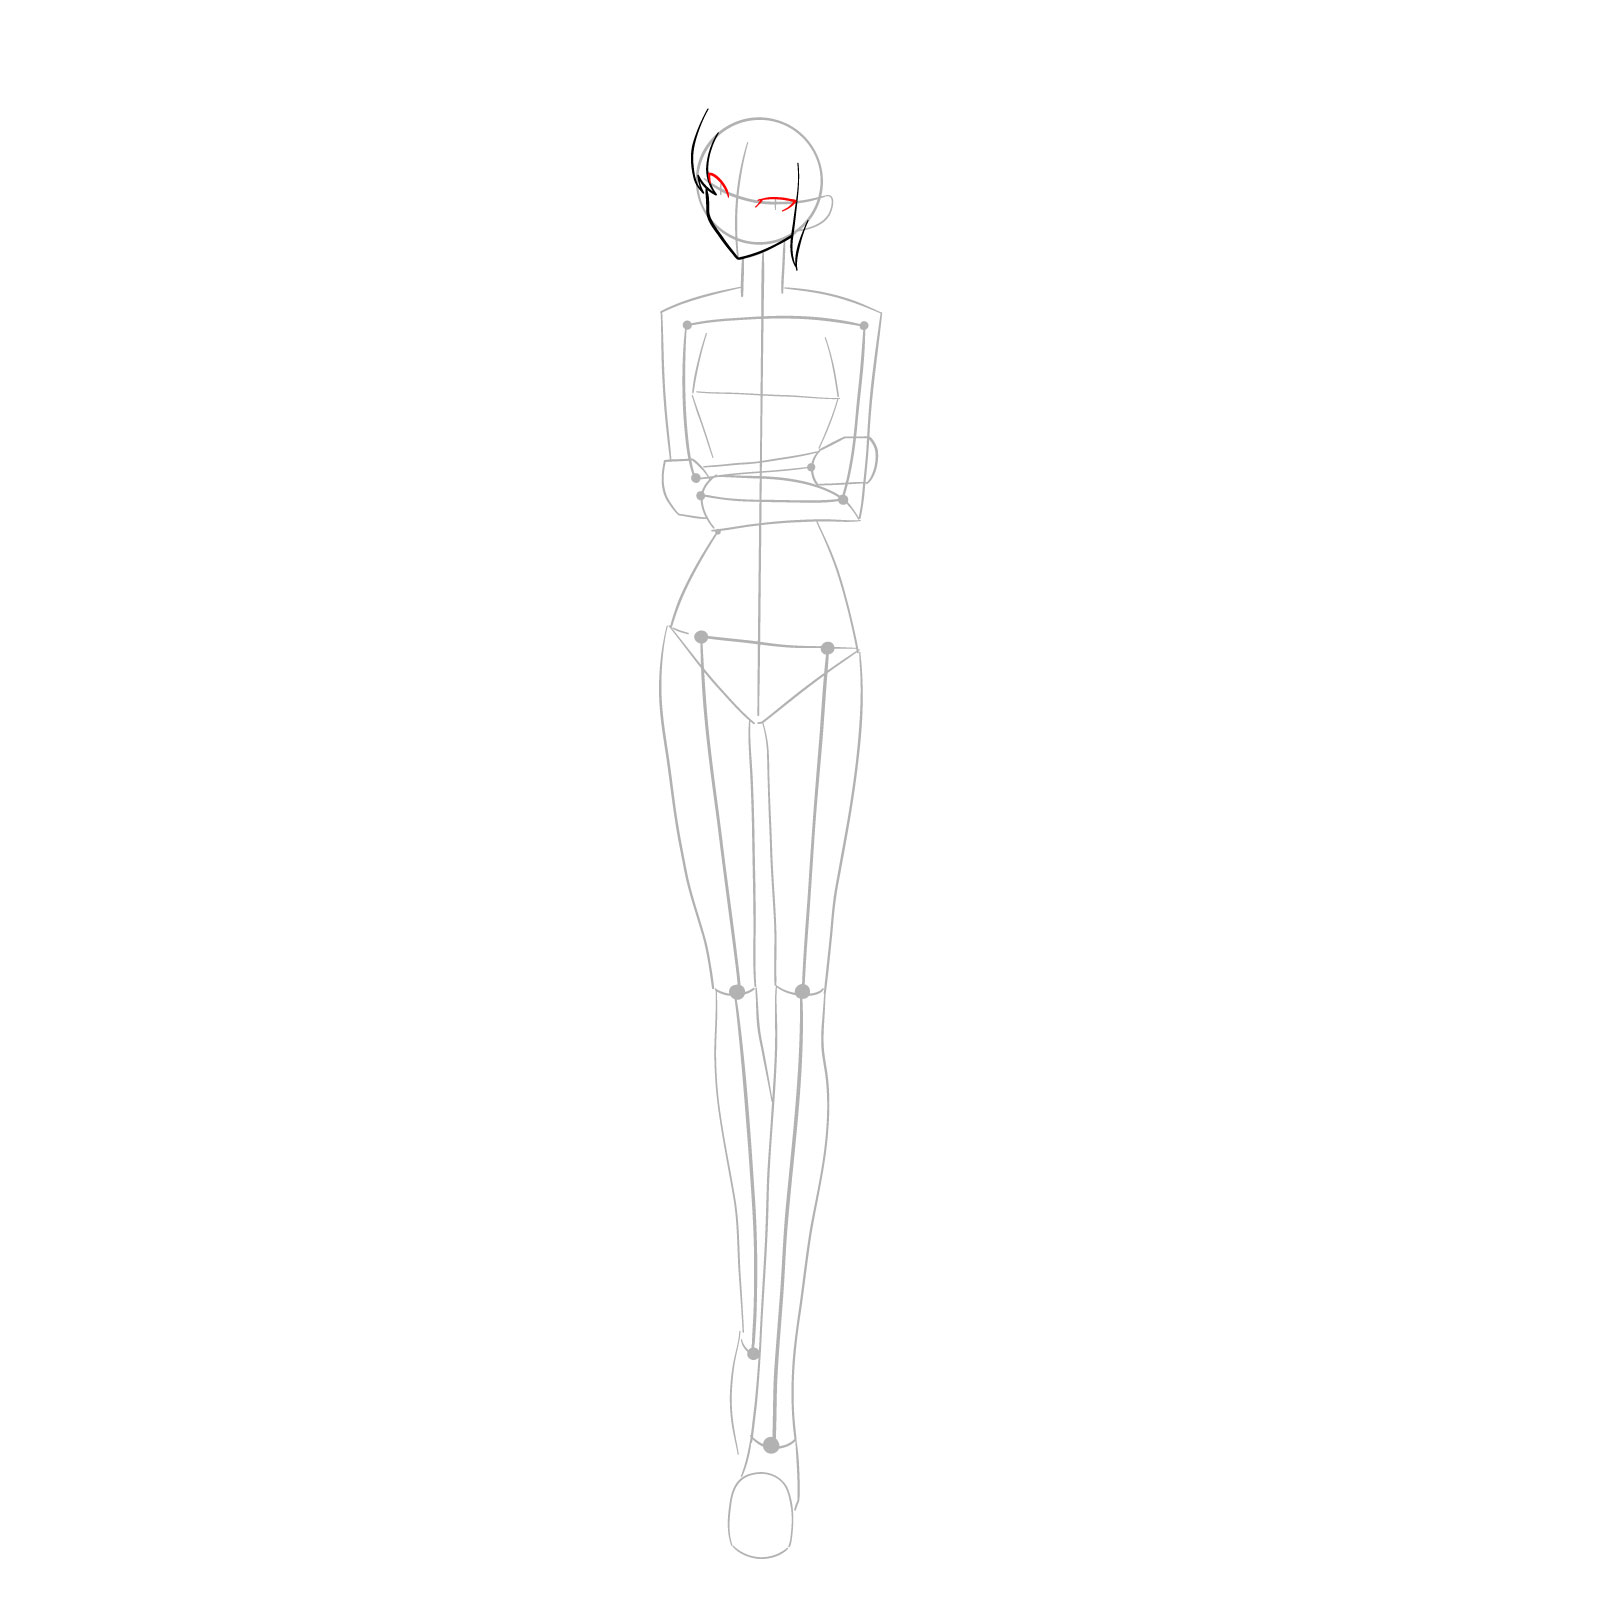 How to draw Kurisu Makise from Steins;Gate - step 06